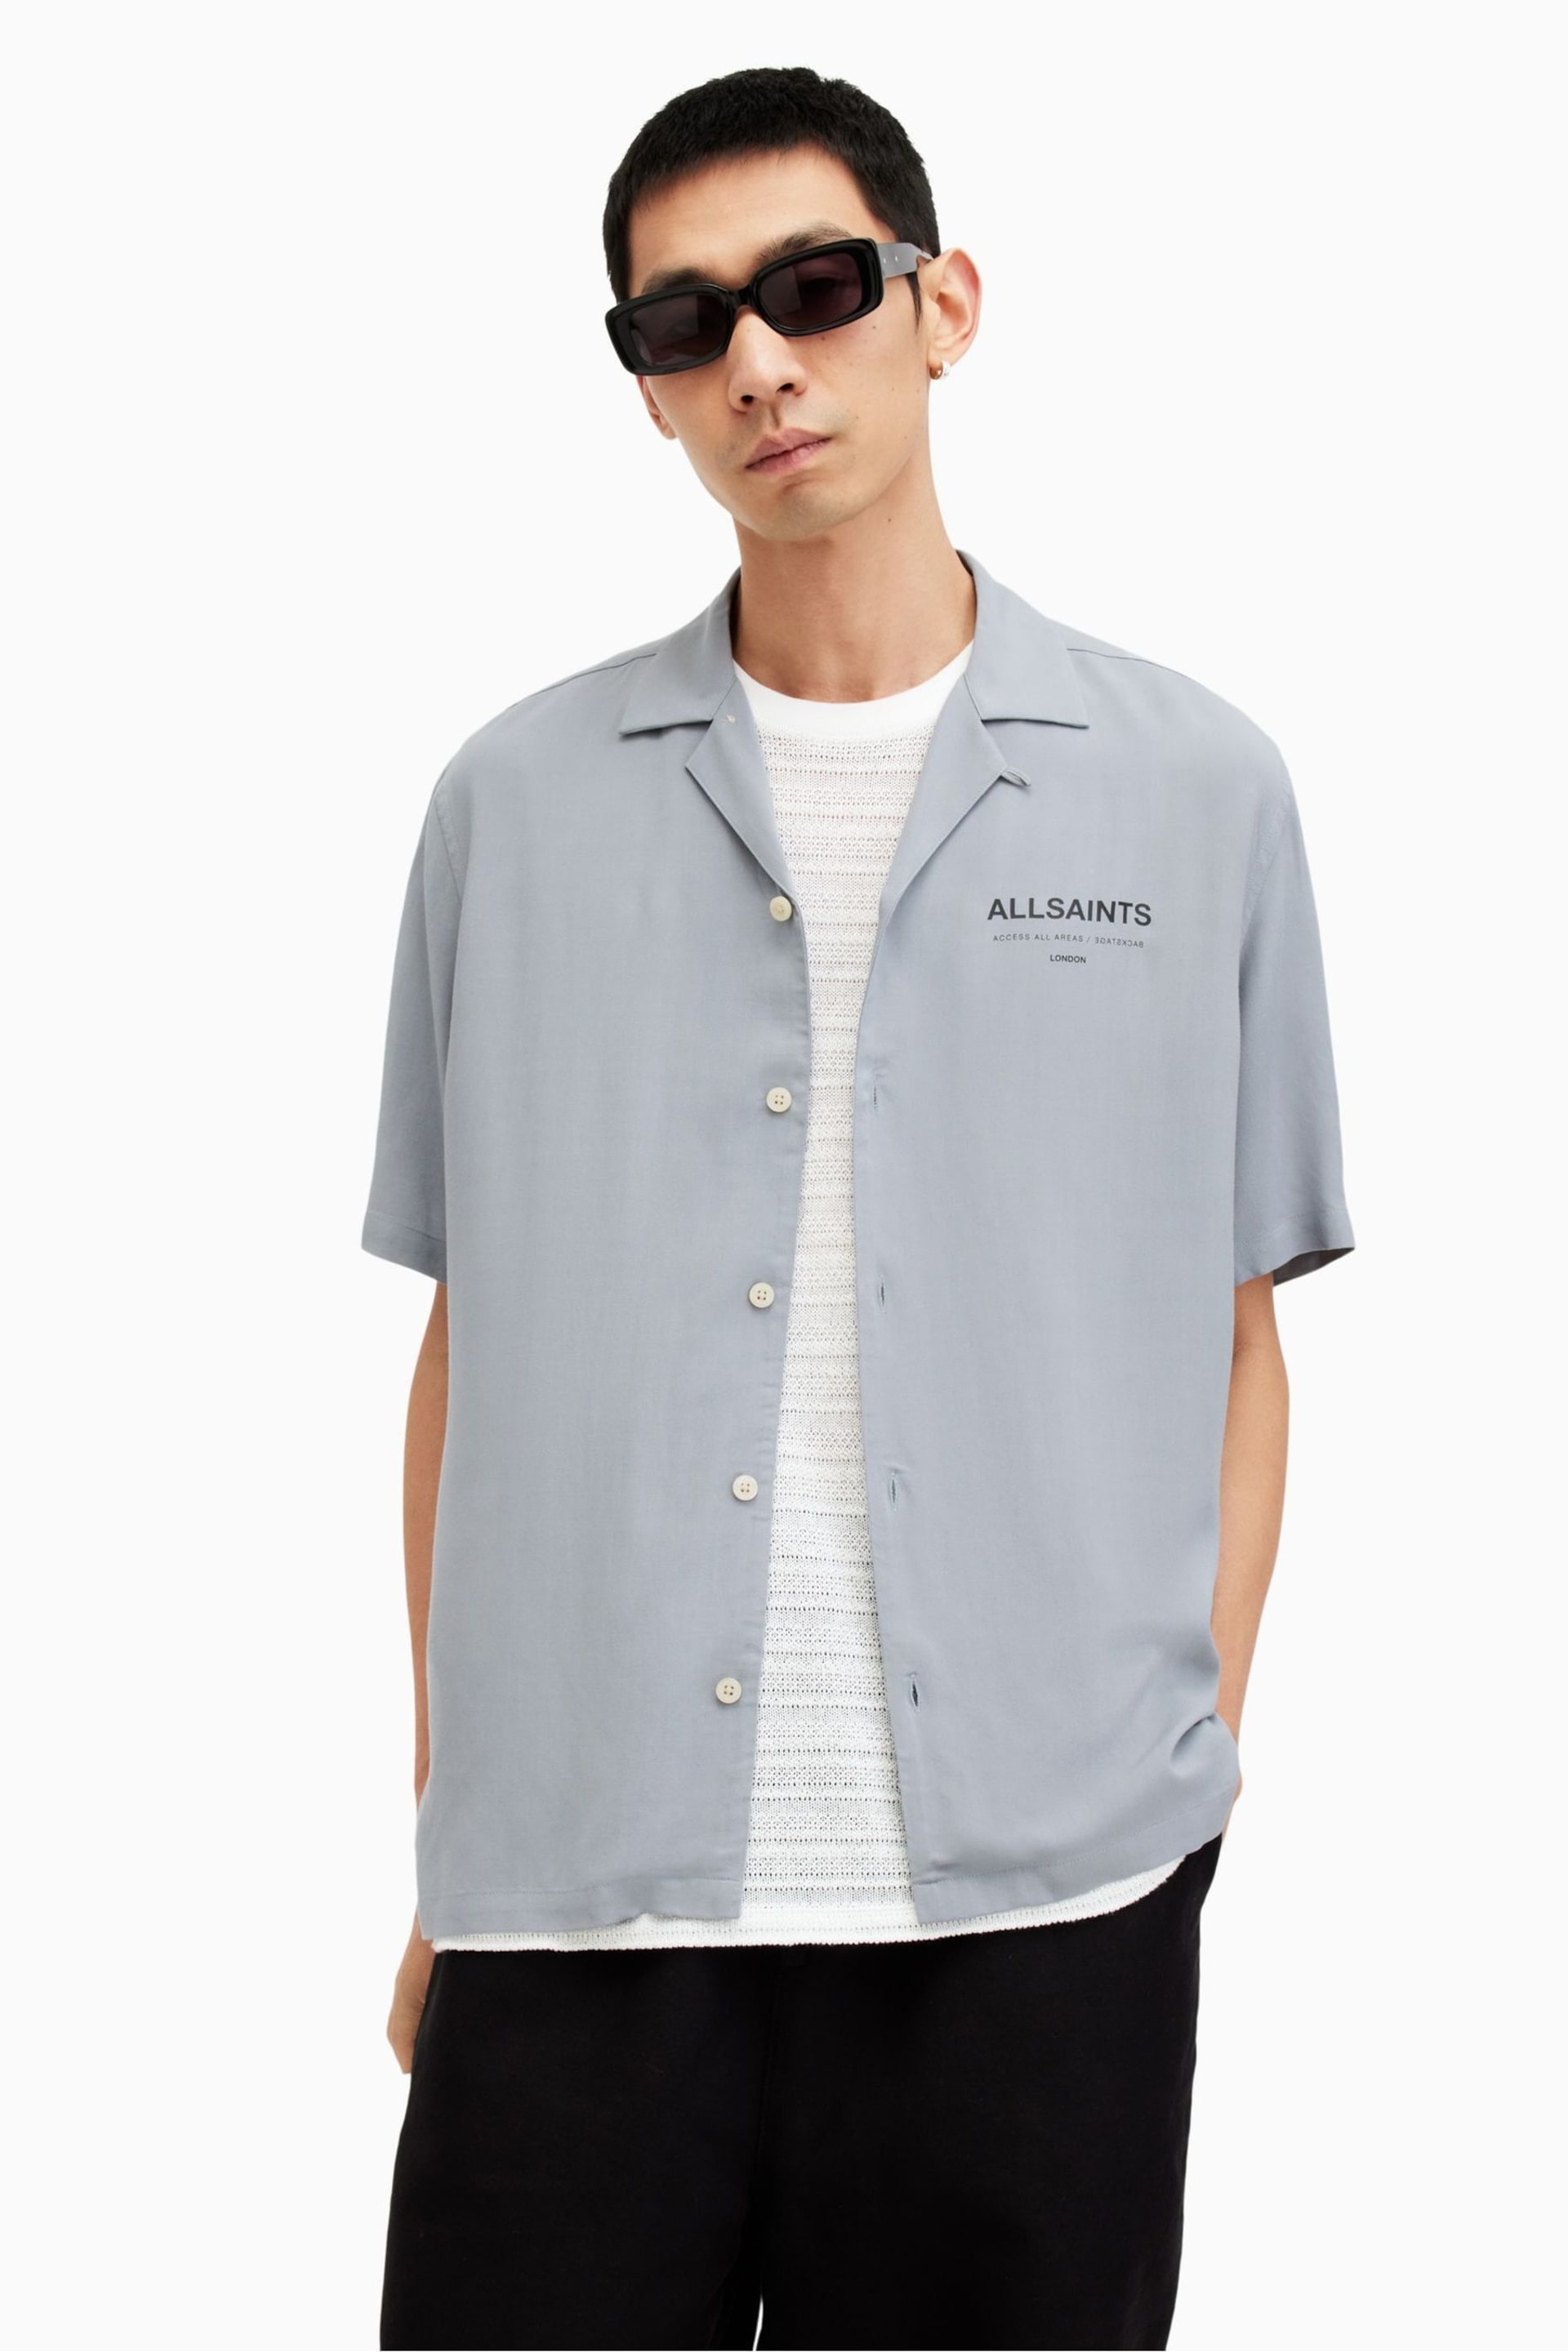 AllSaints Grey Access Shortsleeve Shirt - Image 1 of 7